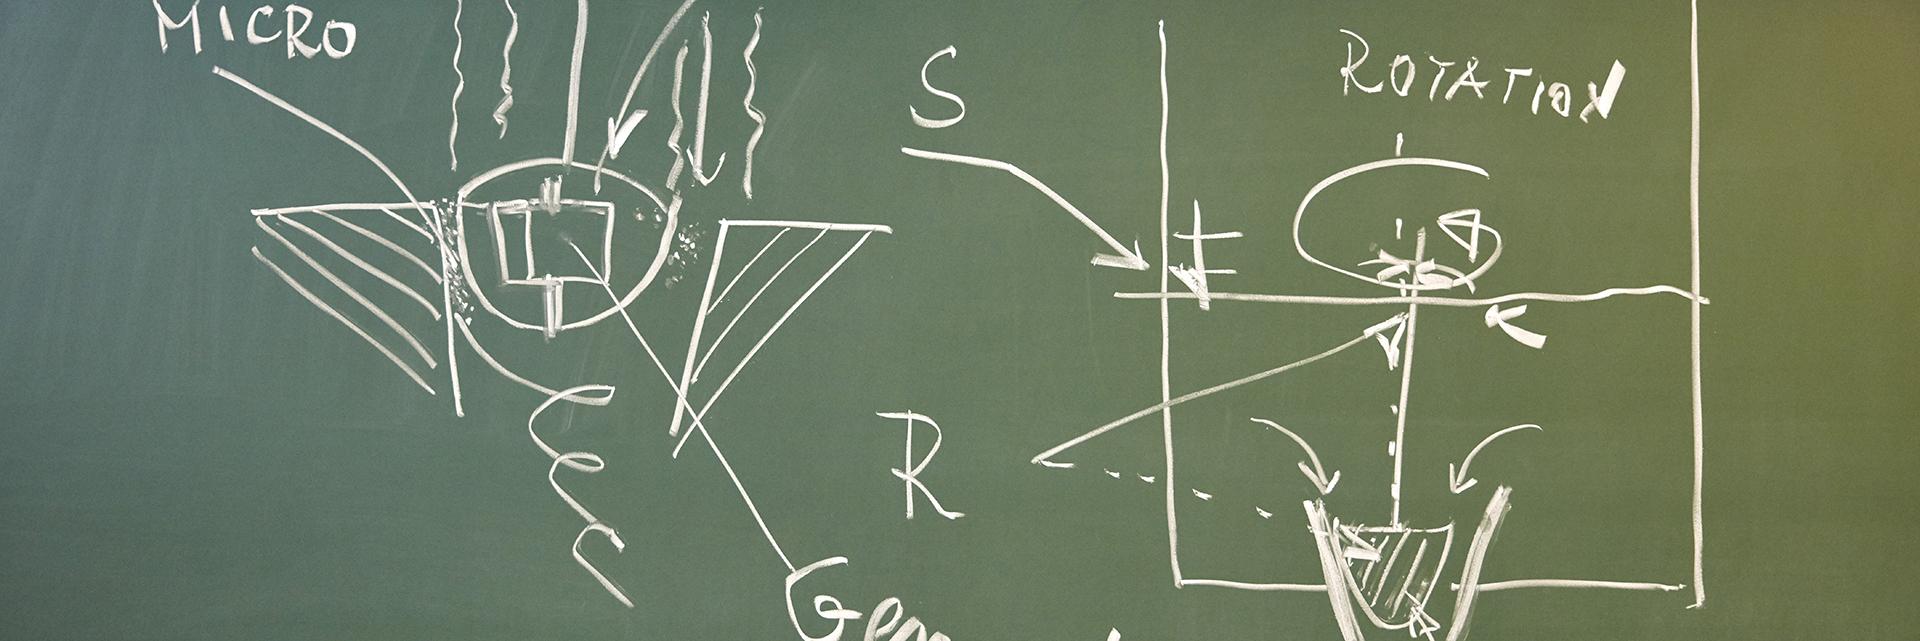 Diagram on black board